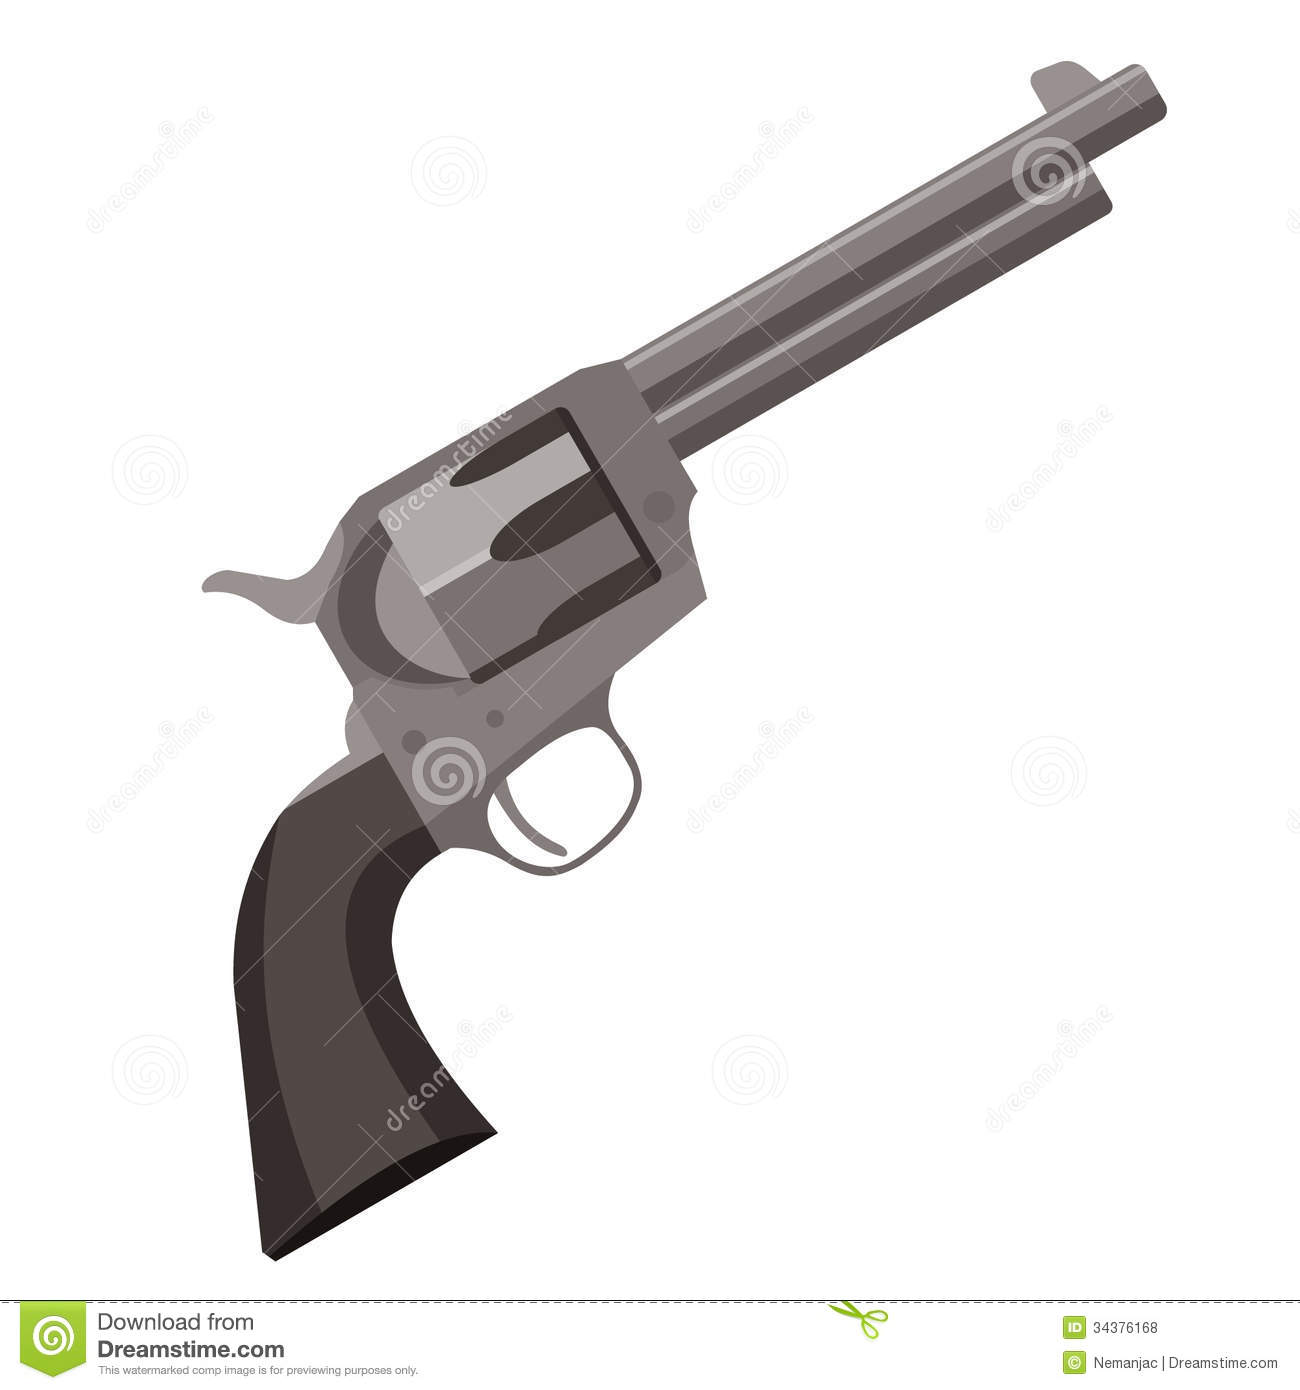 Old Revolver Pistol Royalty Free Stock Photos   Image  34376168